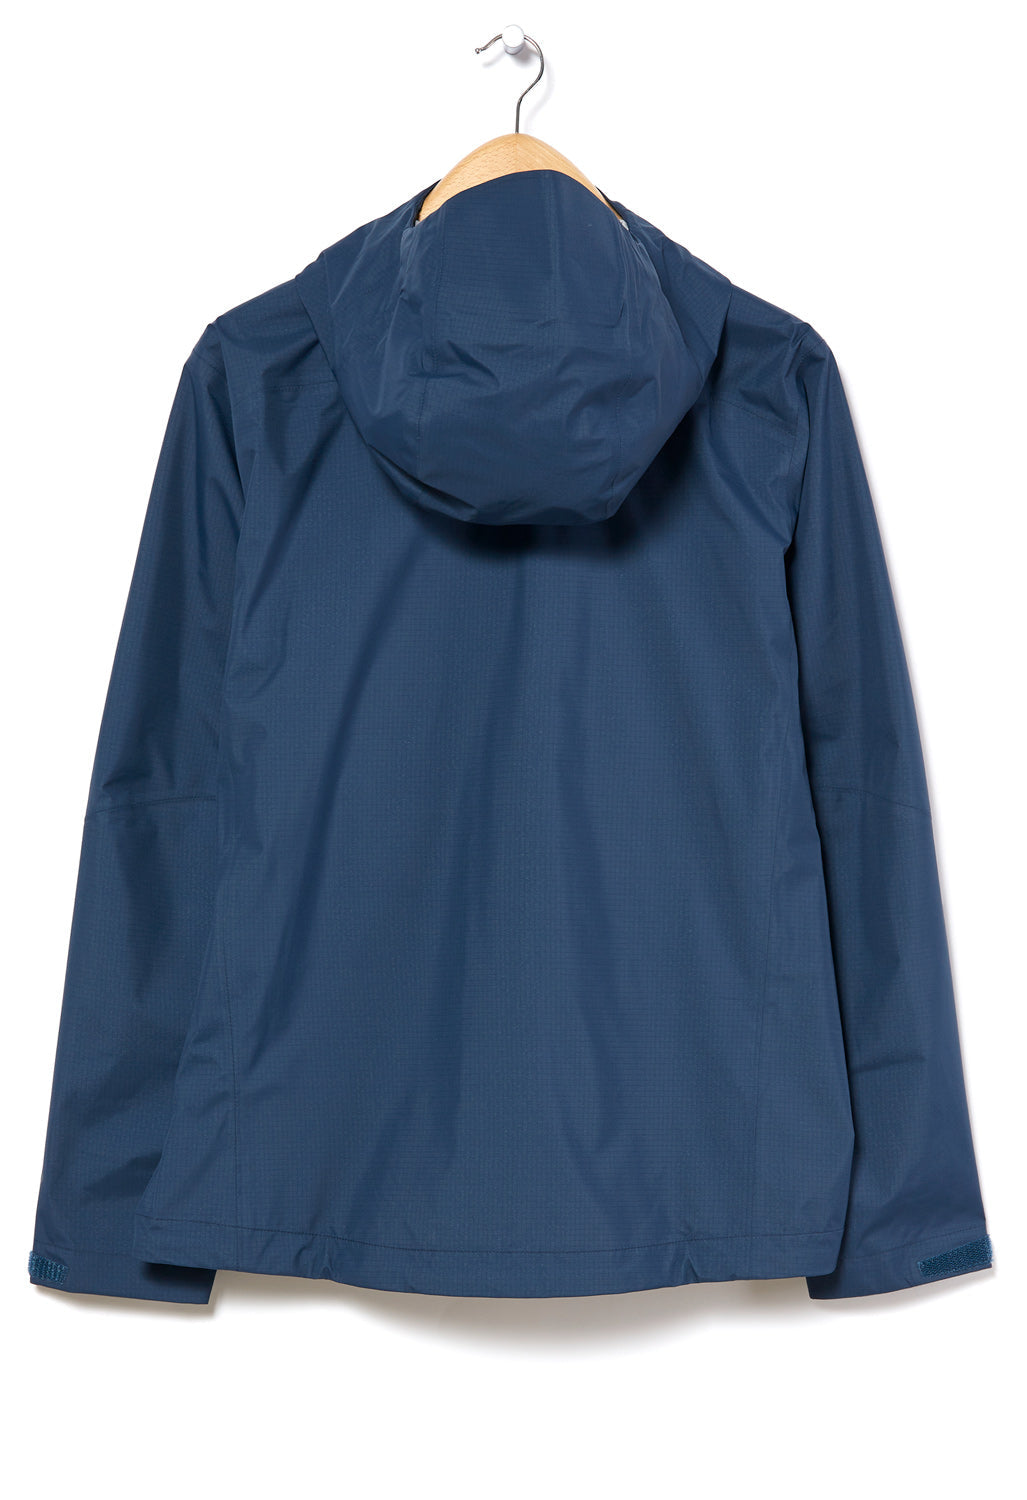 Patagonia Granite Crest Men's Jacket - Tidepool Blue – Outsiders Store UK